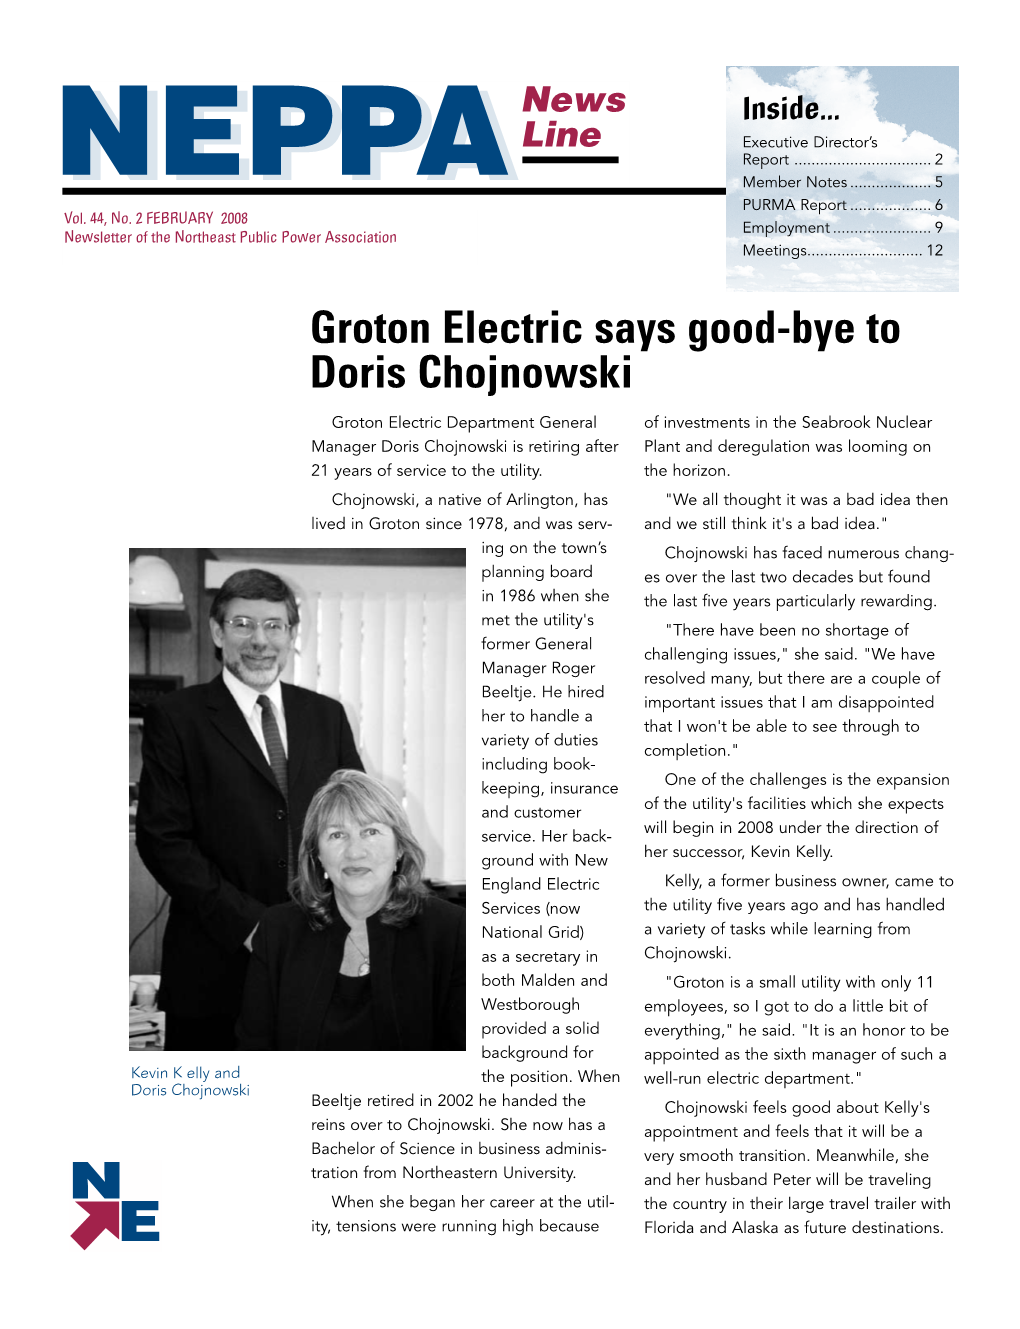 Groton Electric Says Good-Bye to Doris Chojnowski